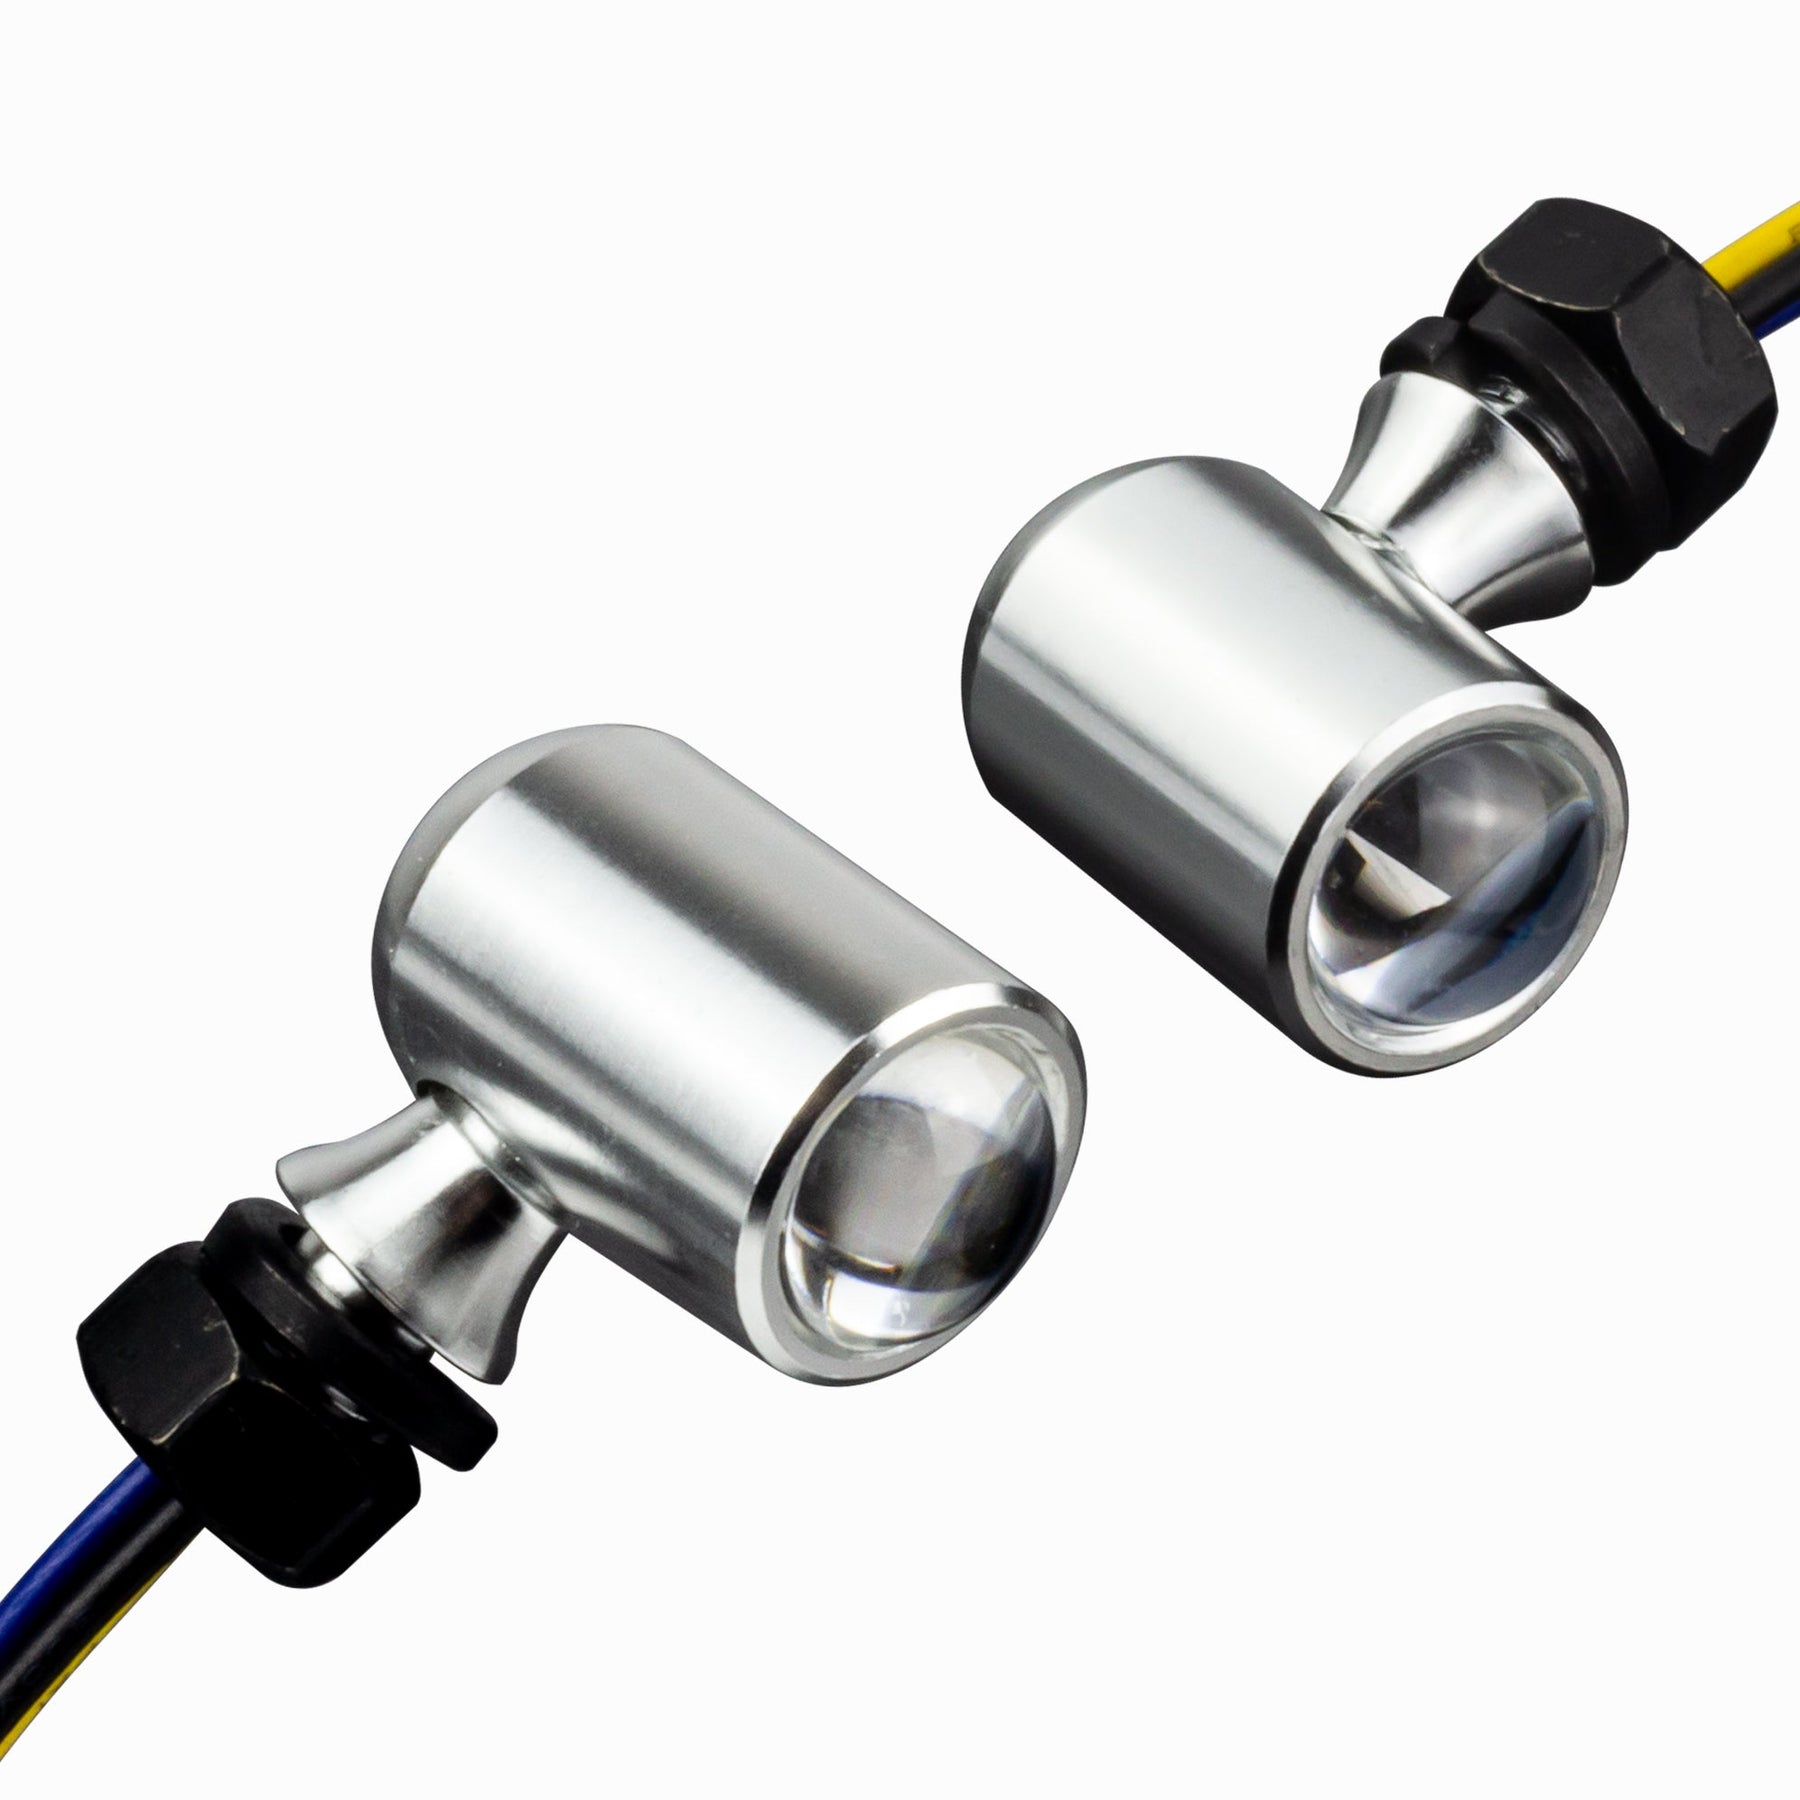 Eagle Lights Mini Bullet Rear LED Turn Signal Lights - Running Light, Brake Light and Turn Signal (2 Lights Included)